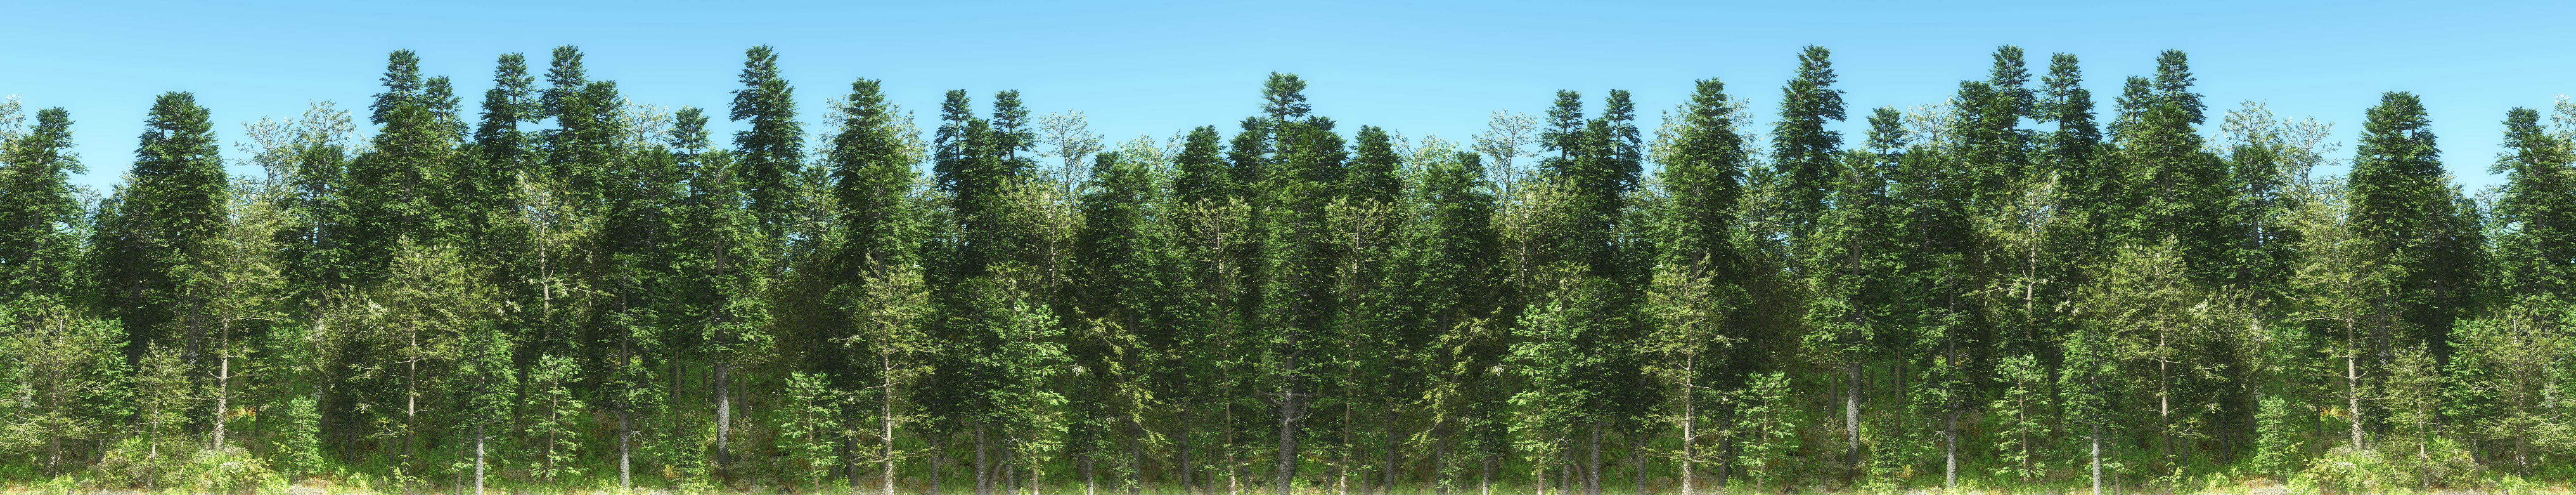 Forest Background by jbjdesigns on DeviantArt